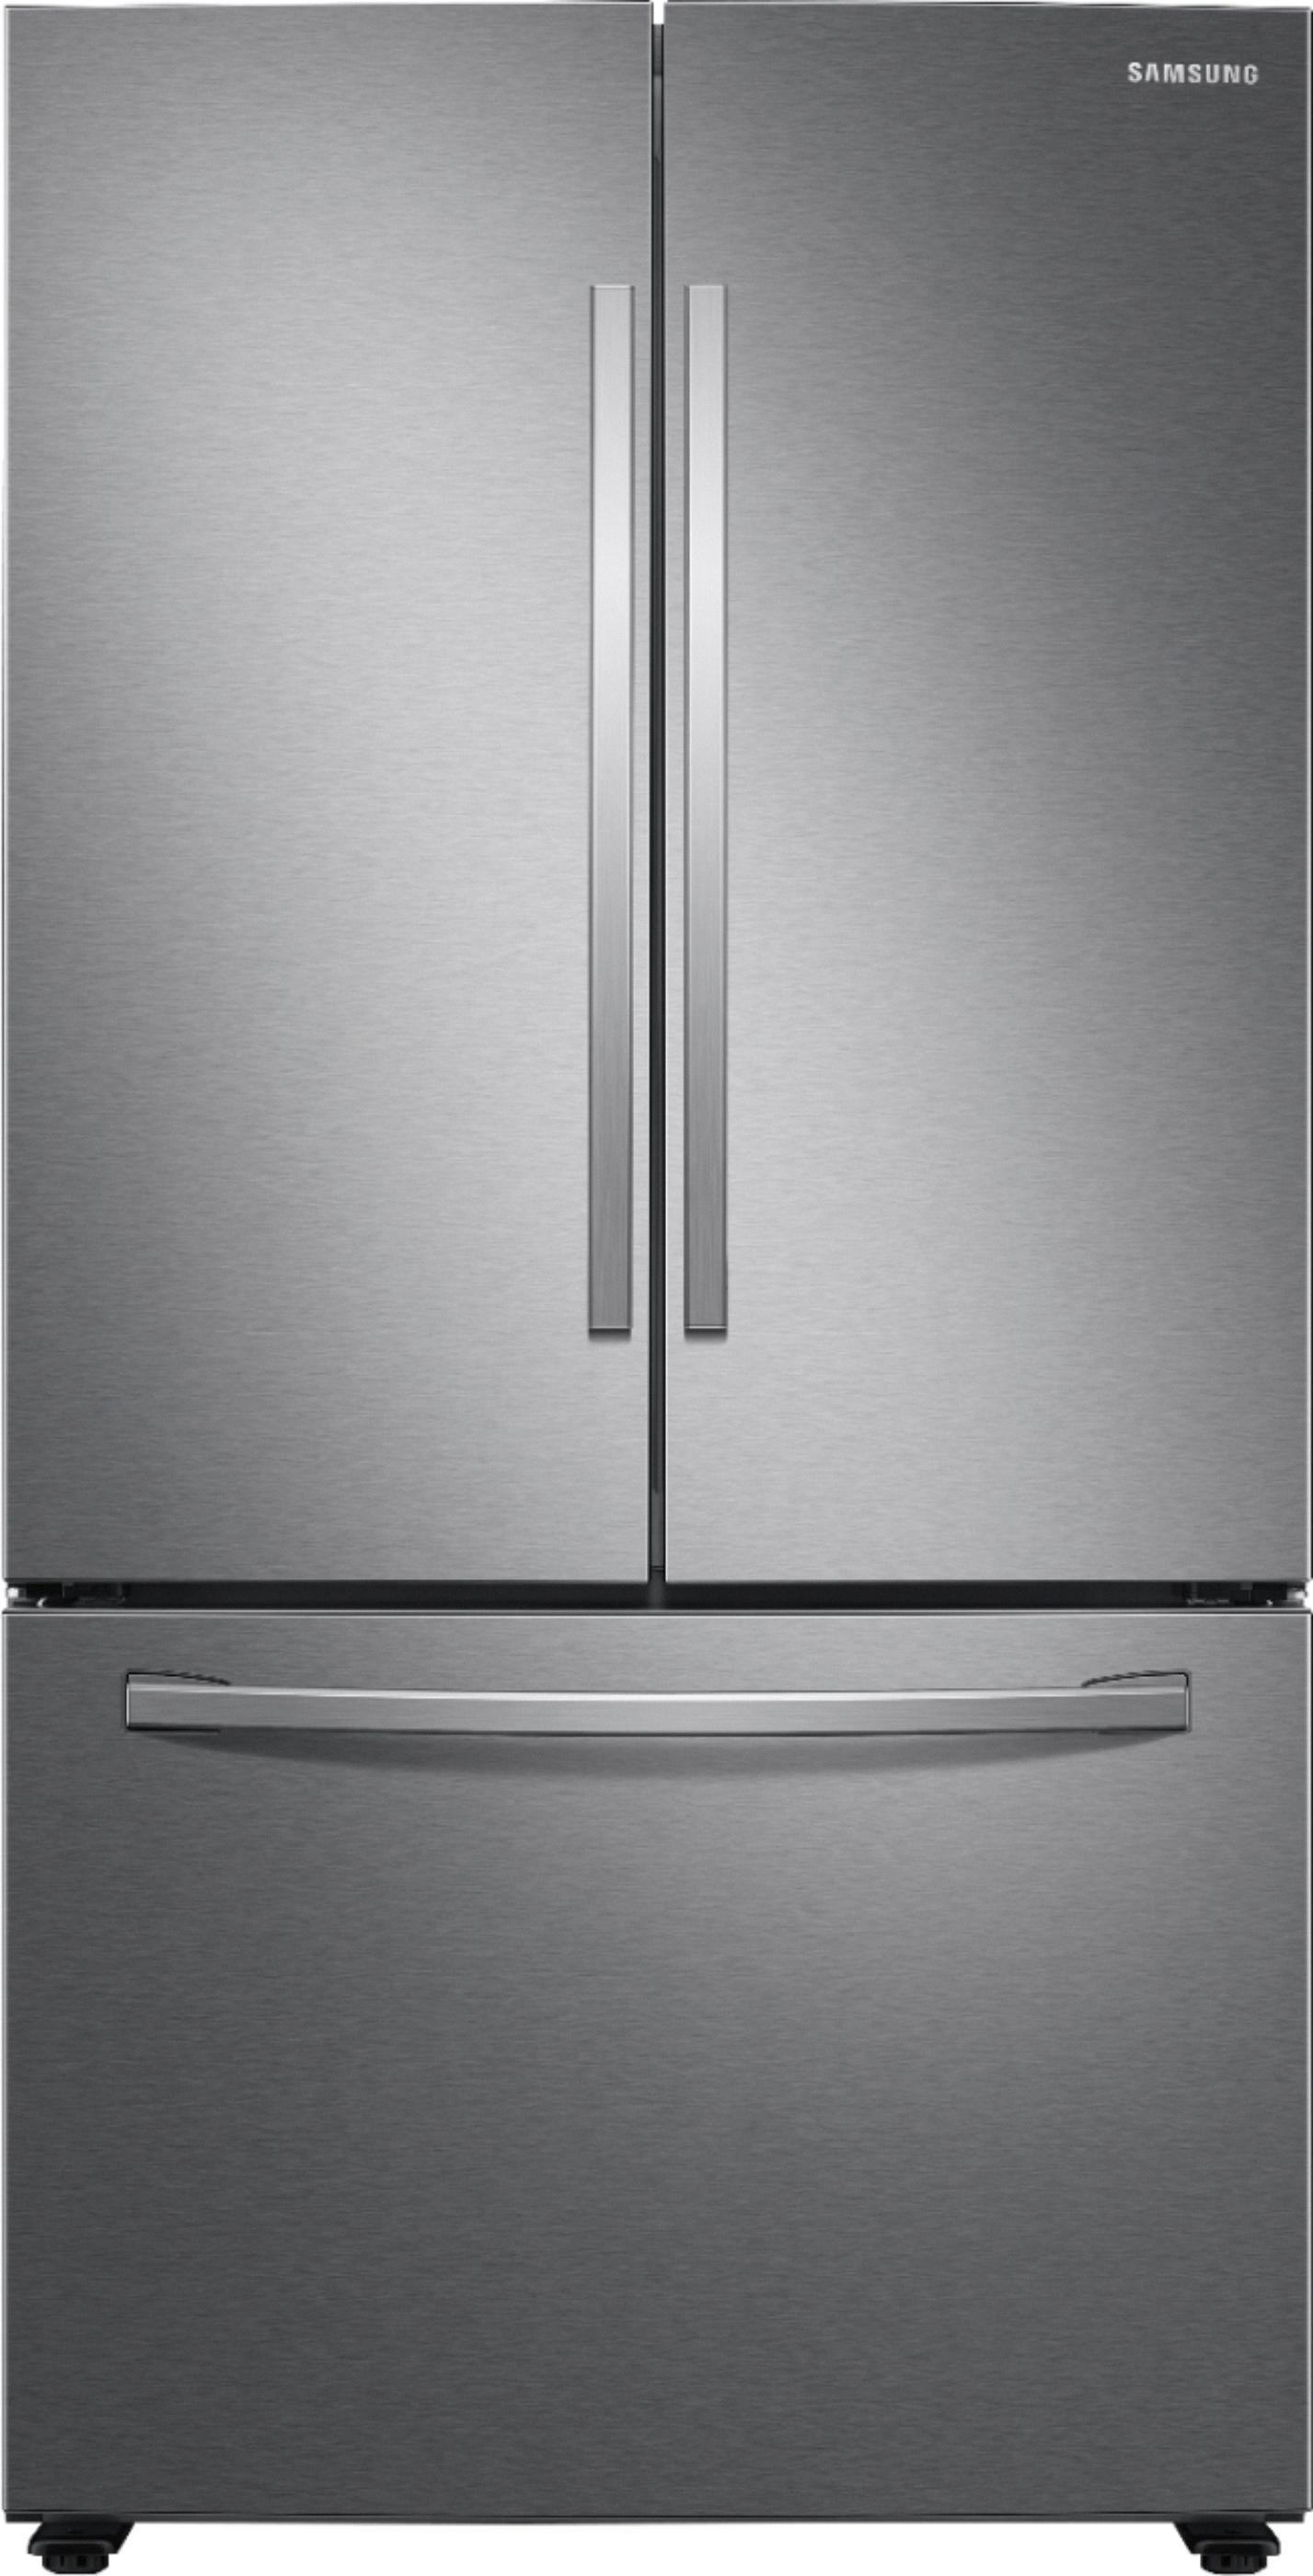 recalls on samsung refrigerators